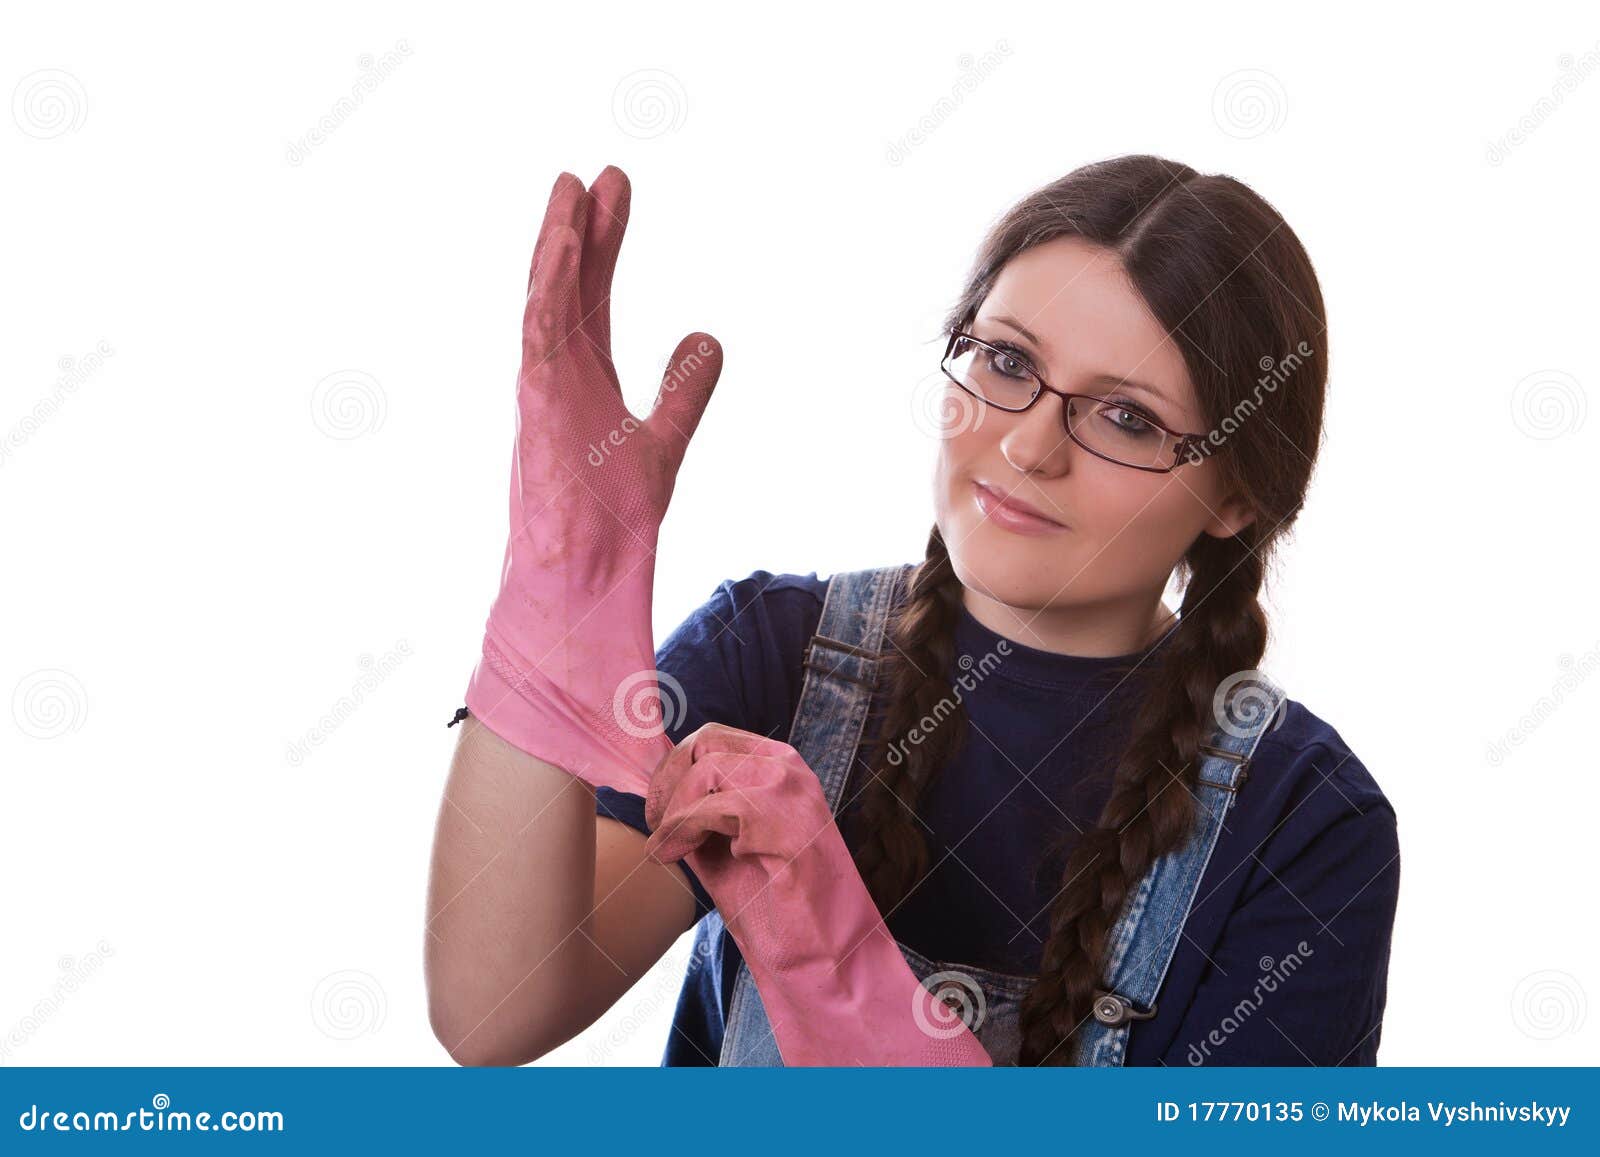 wearing gloves Girl latex